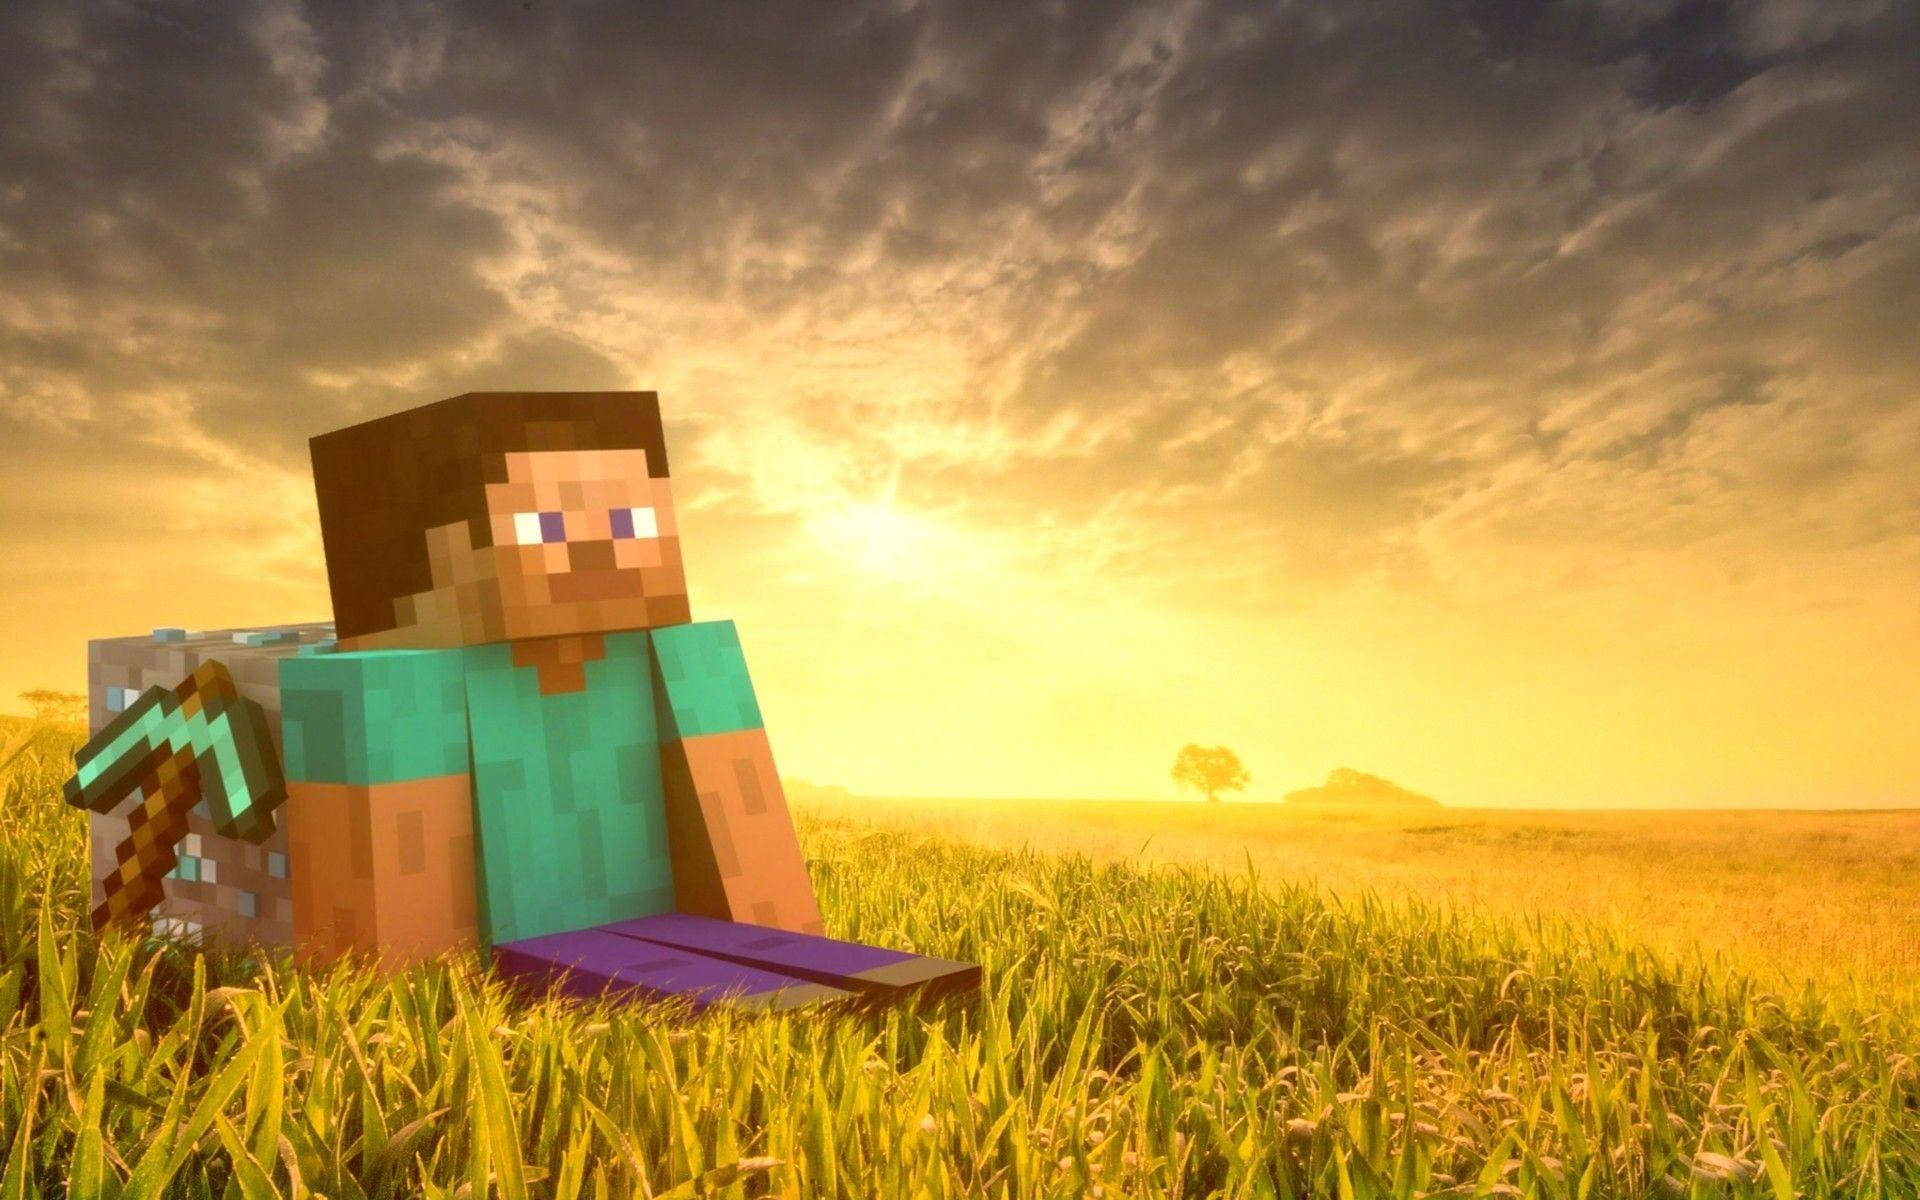 Minecraft Steve In Grass Field Hd